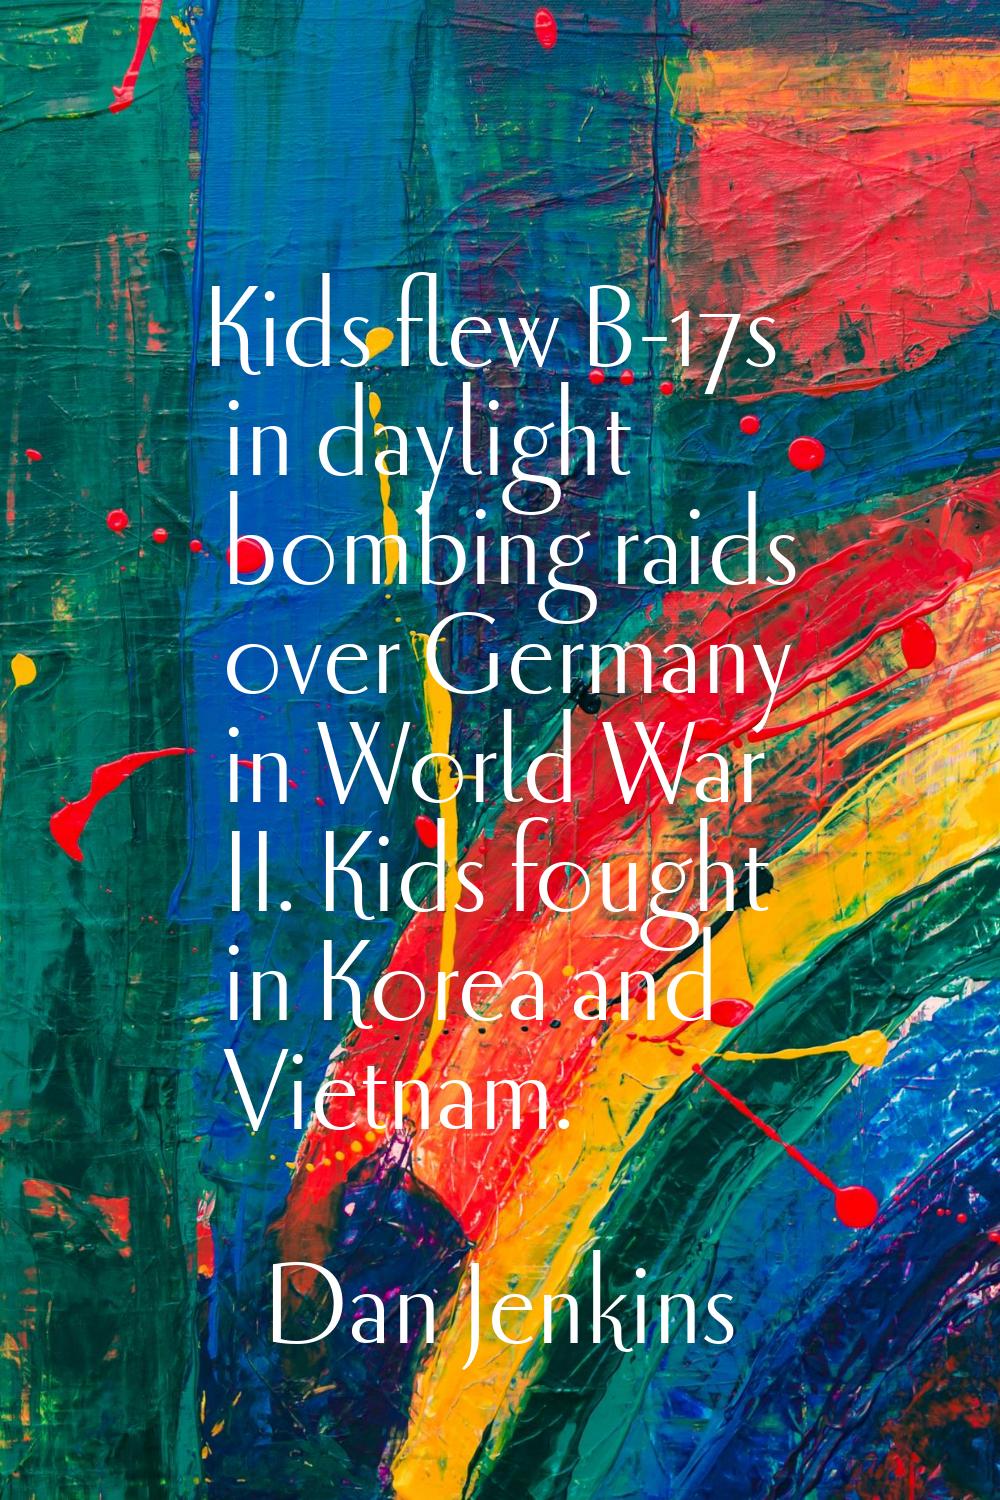 Kids flew B-17s in daylight bombing raids over Germany in World War II. Kids fought in Korea and Vi